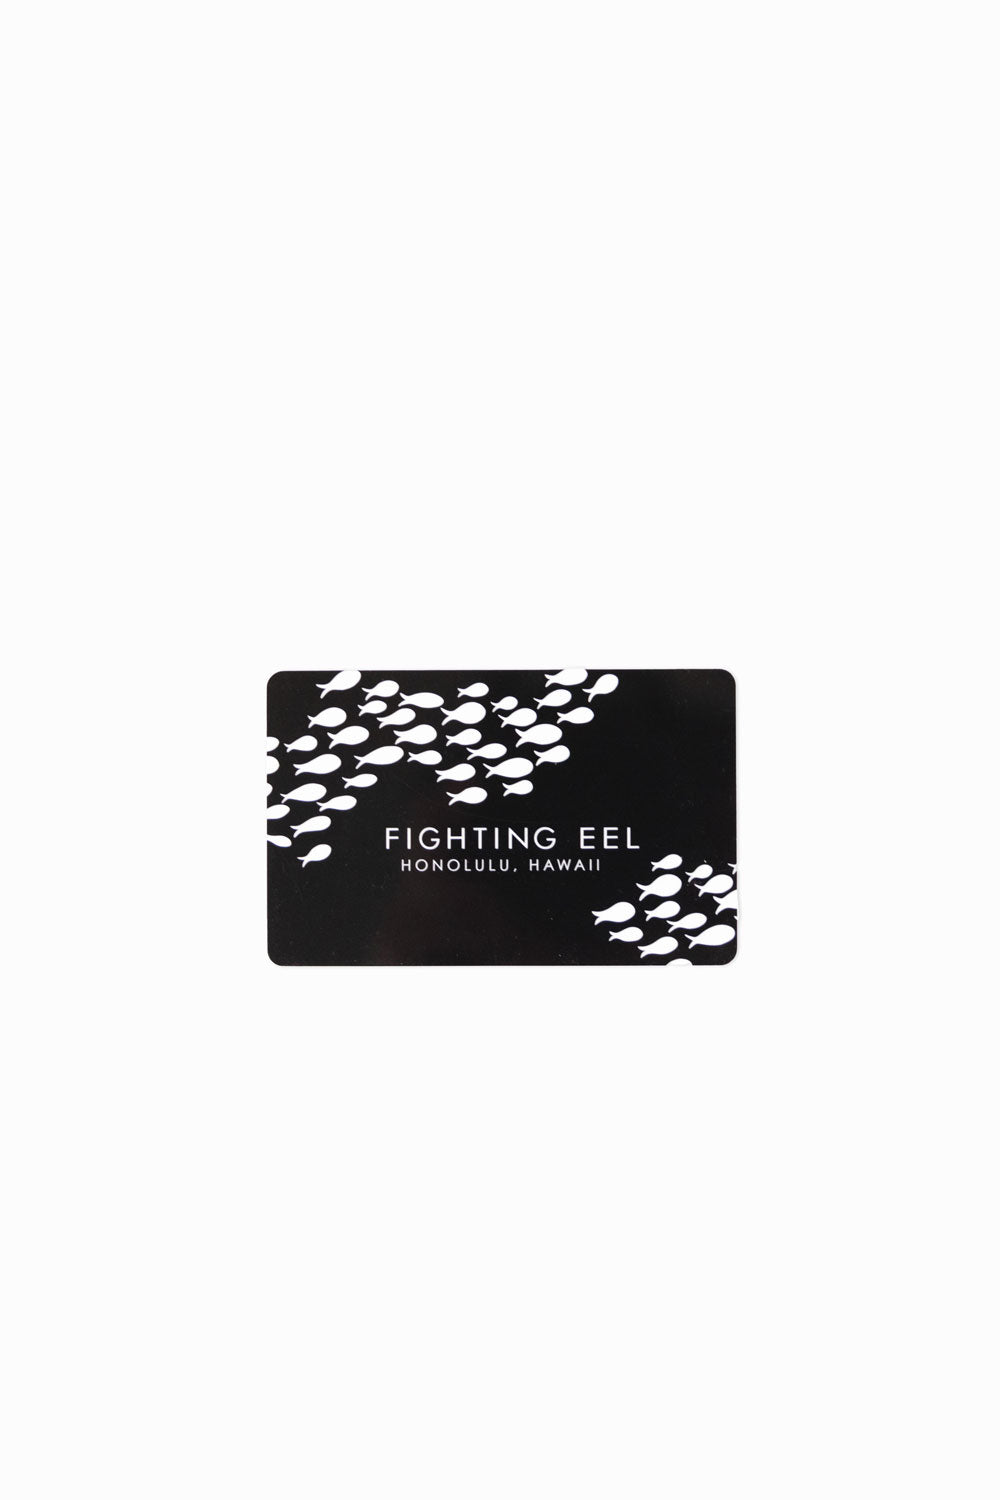 Fighting Eel E-Gift Card